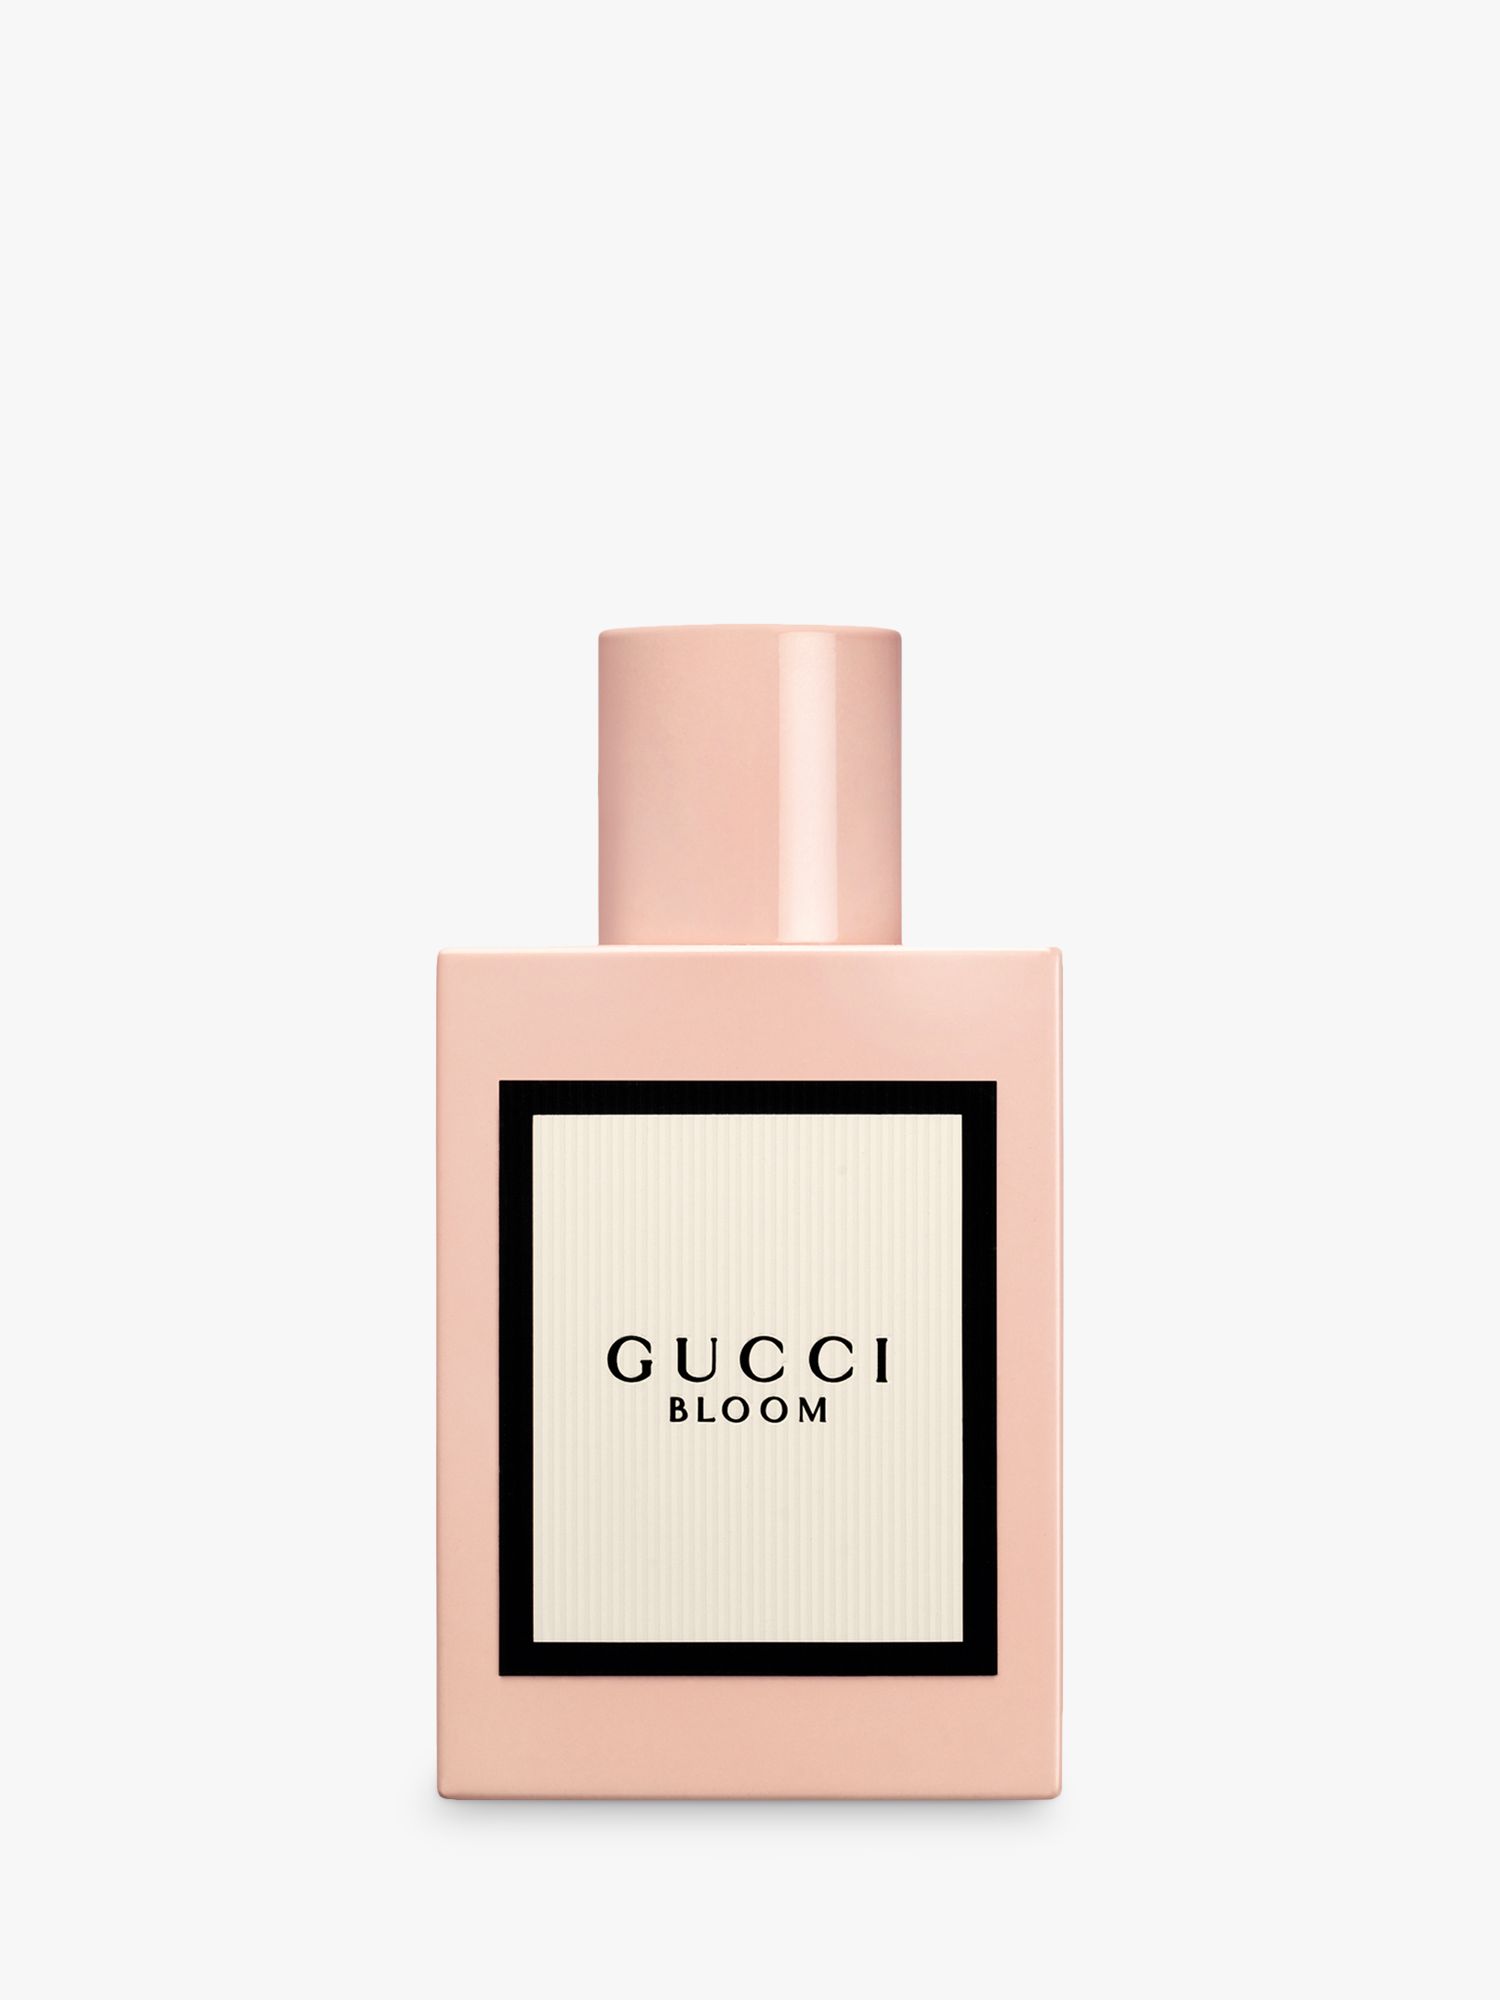 Gucci Bloom Eau de Parfum, 50ml at John Lewis u0026amp; Partners